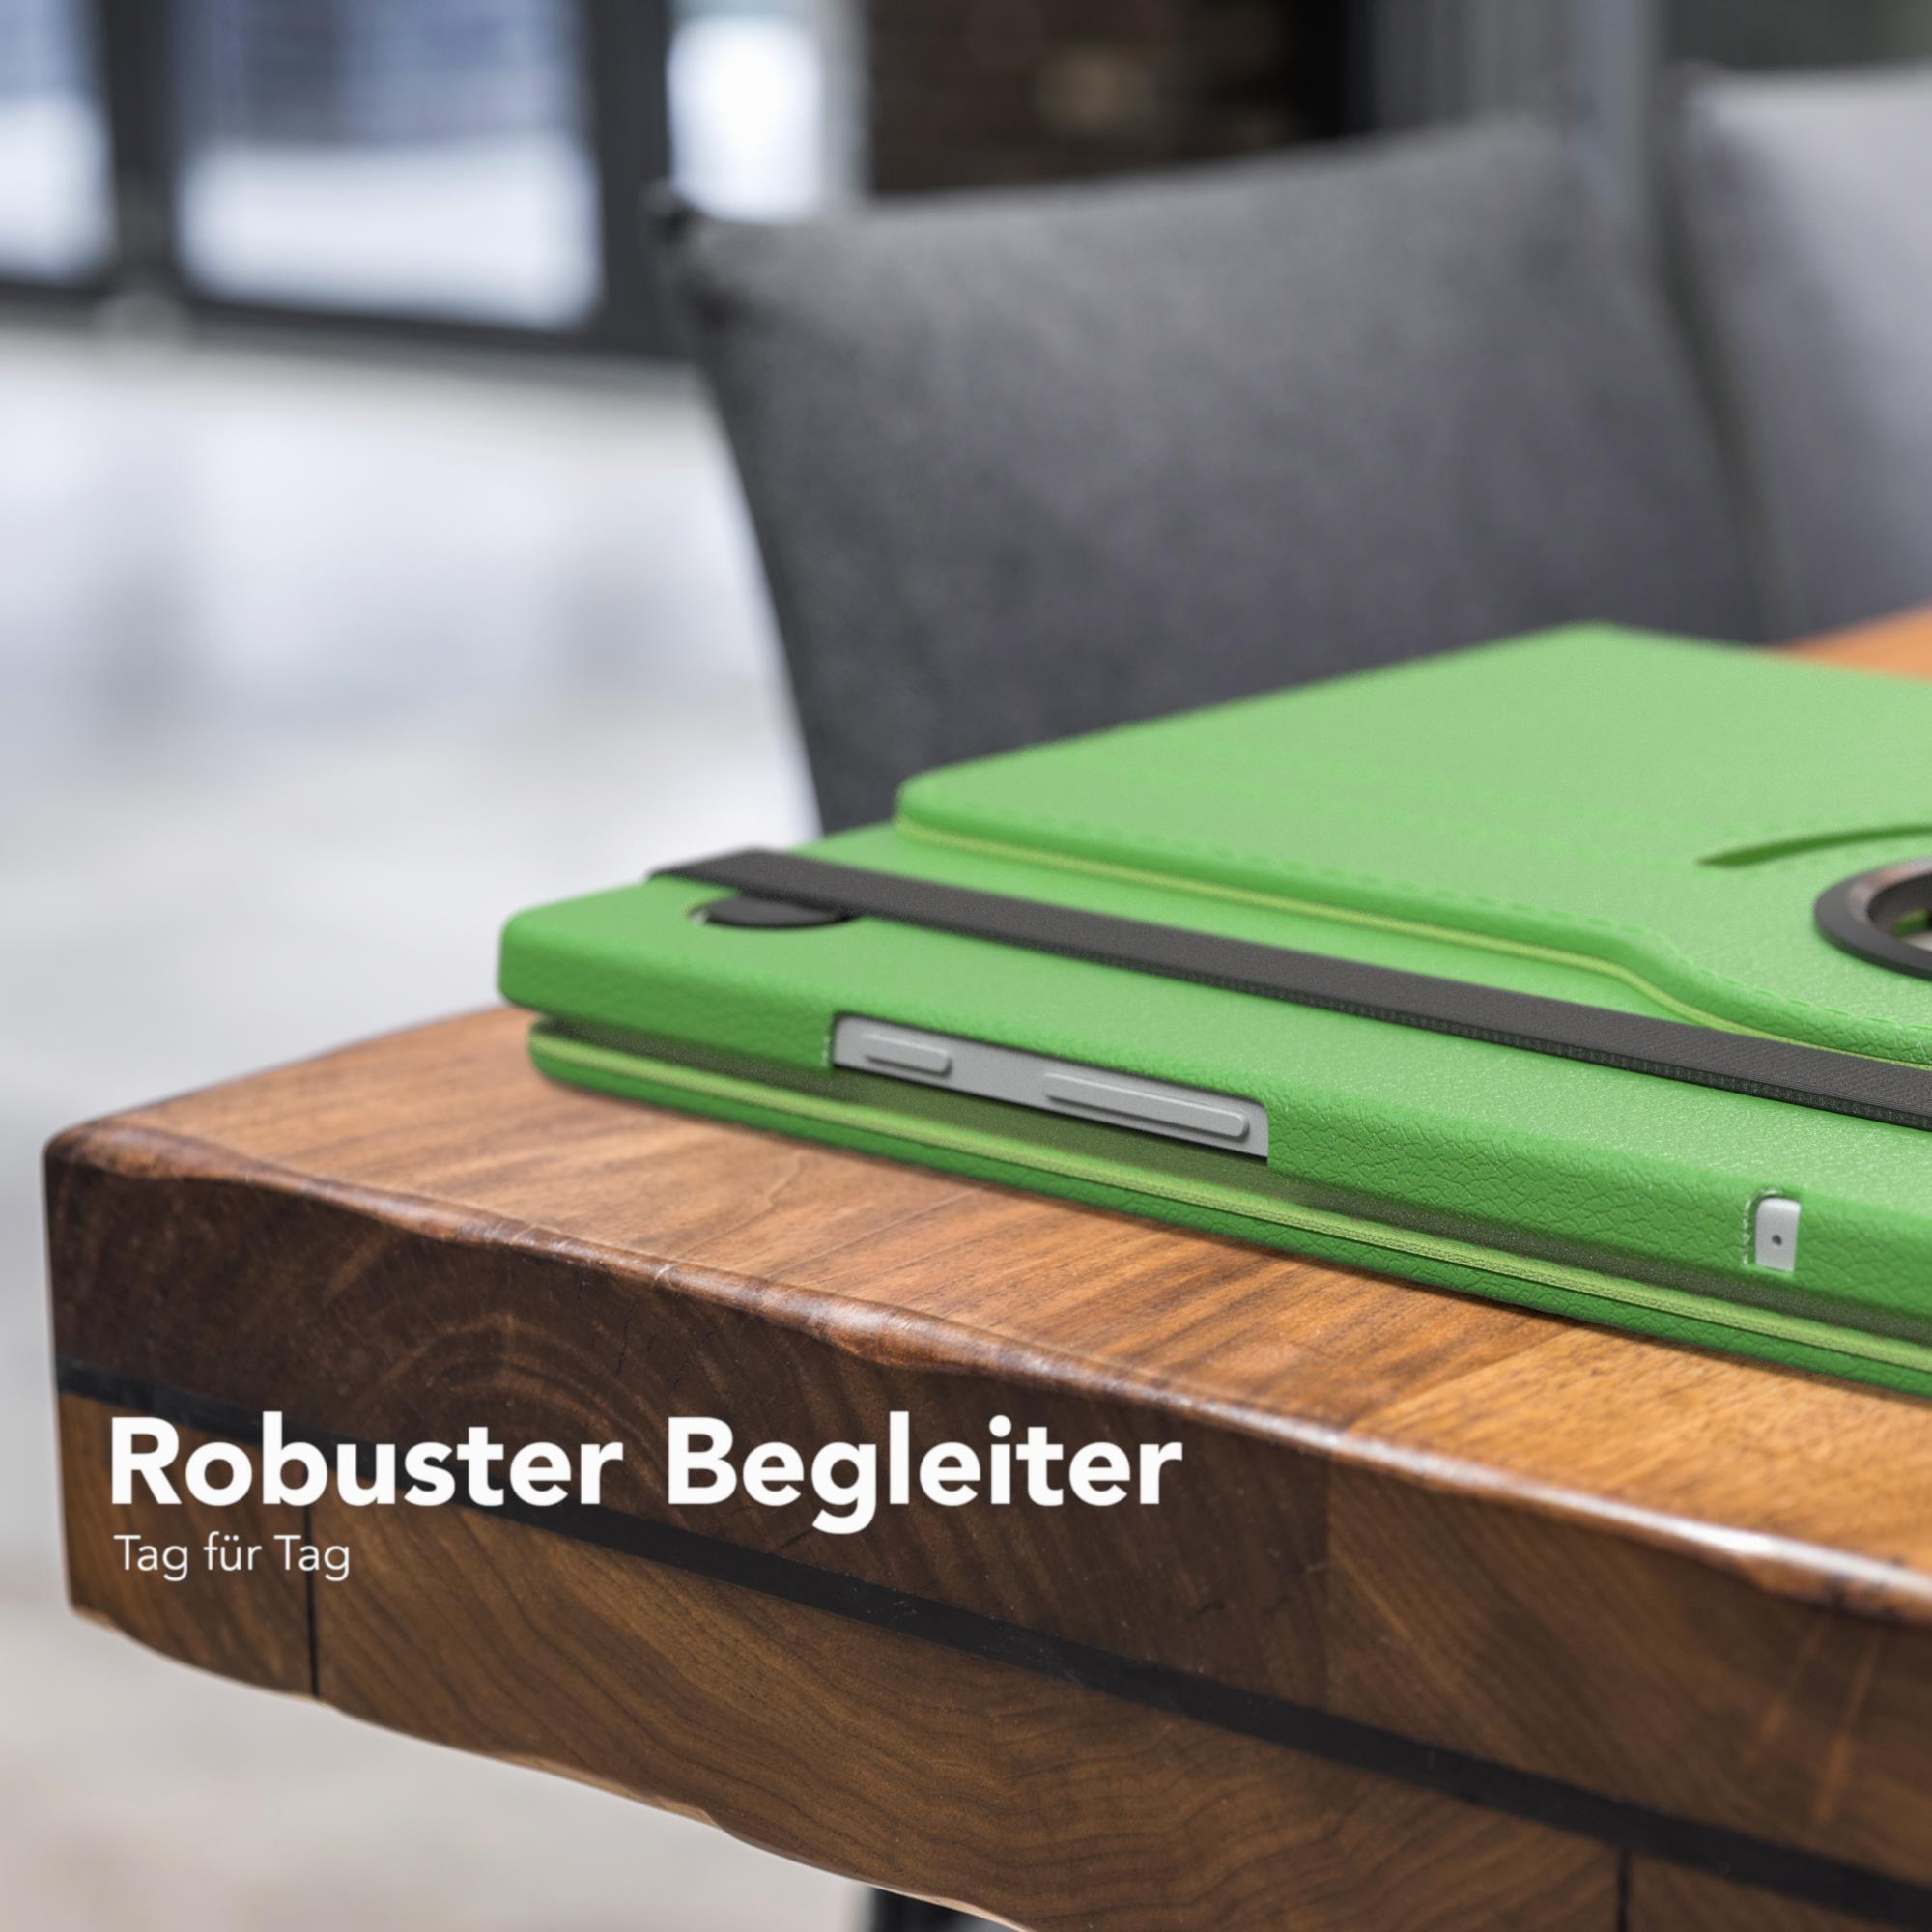 EAZY CASE Schutzhülle Bookcover Grün LTE Galaxy für Rotationcase Samsung 10,5 Tablethülle Tab Kunstleder, 10.5\